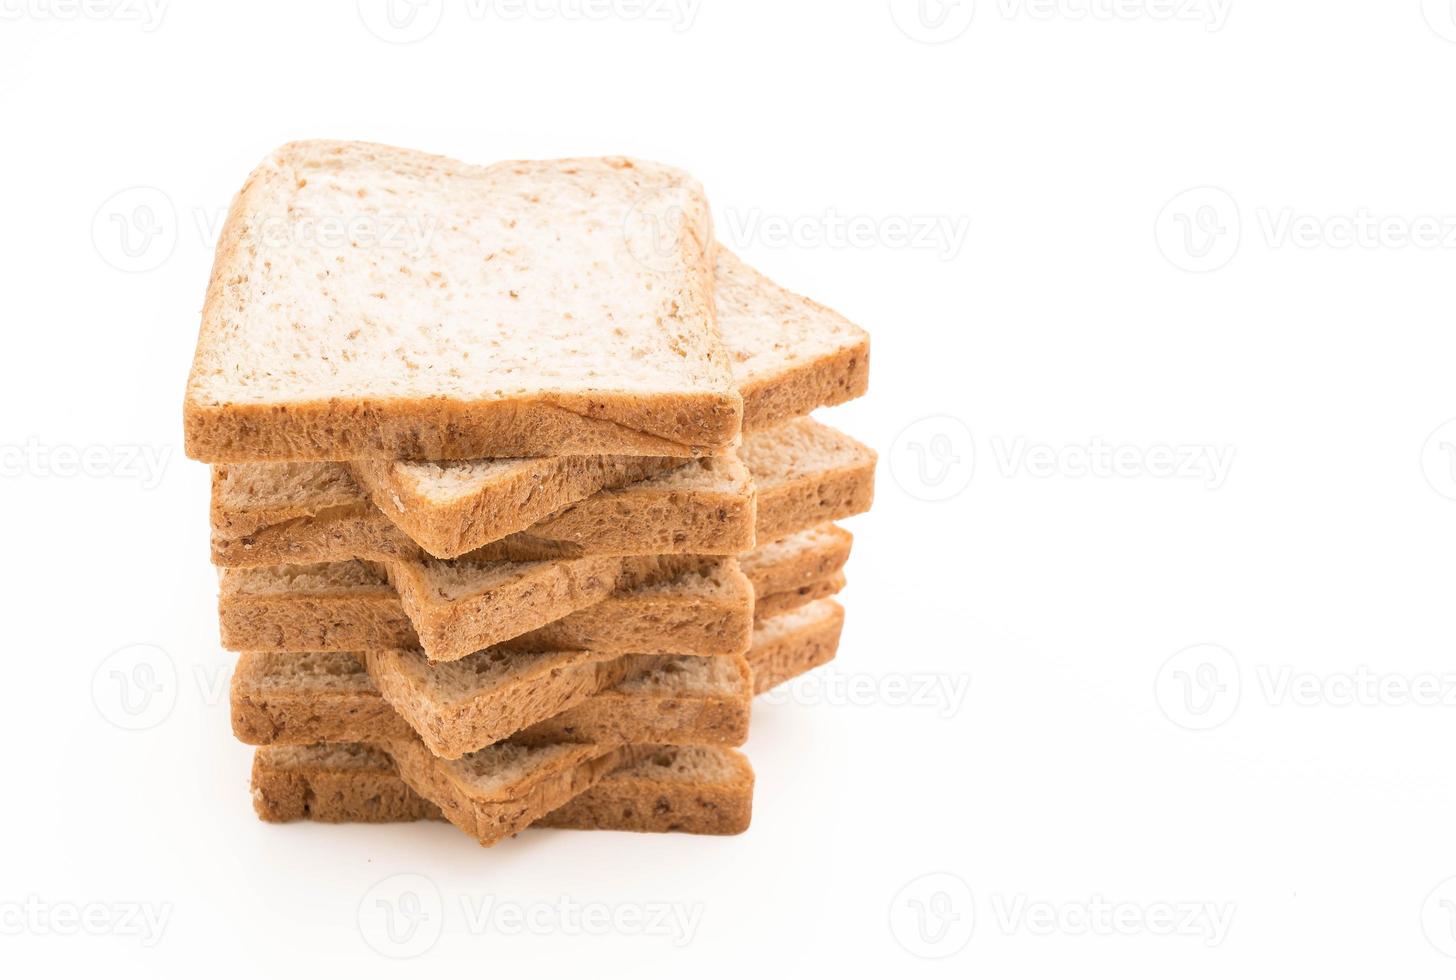 pan de trigo integral sobre fondo blanco foto